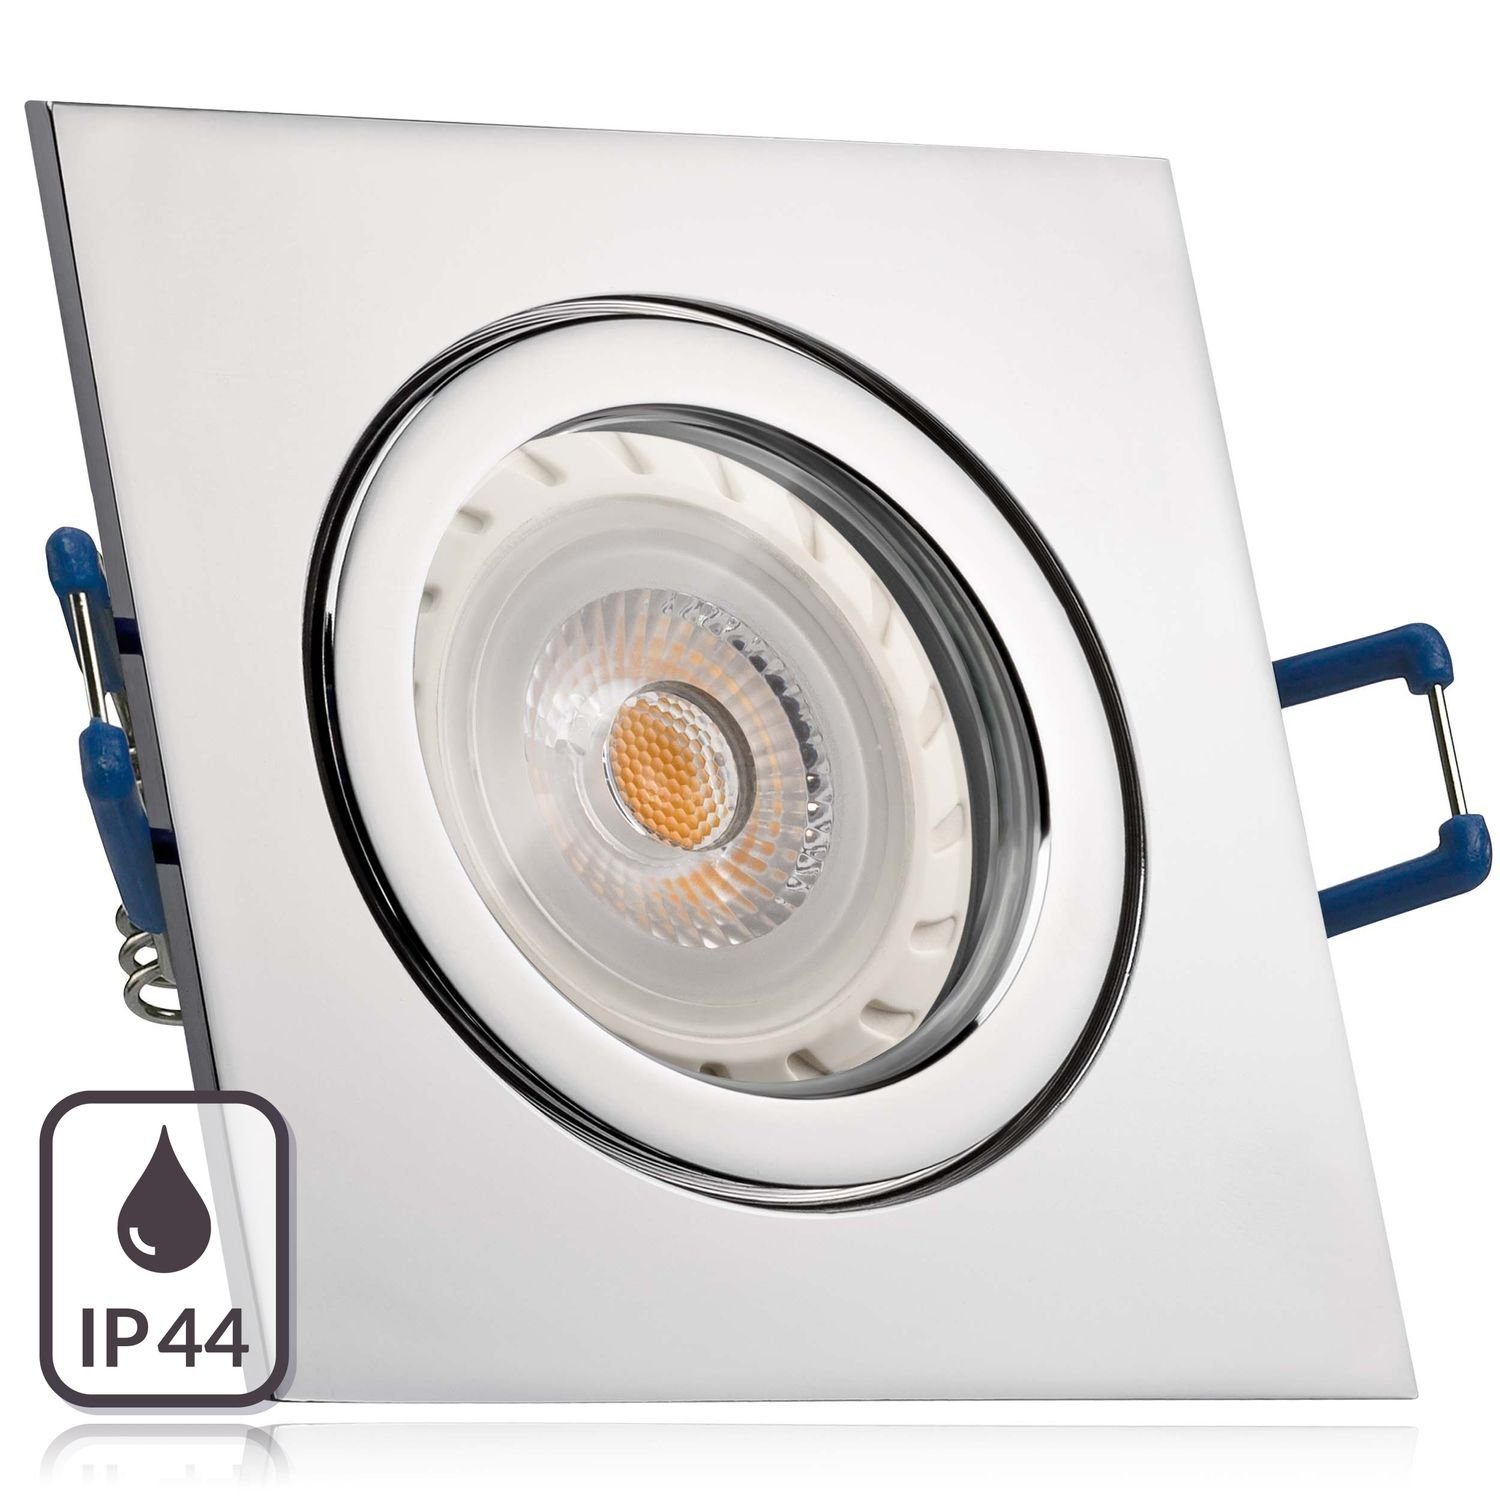 Ein neues Produkt ist eingetroffen LEDANDO LED Einbaustrahler IP44 von mit Markenstrahler Chrom Set Einbaustrahler GU10 LED LEDA LED